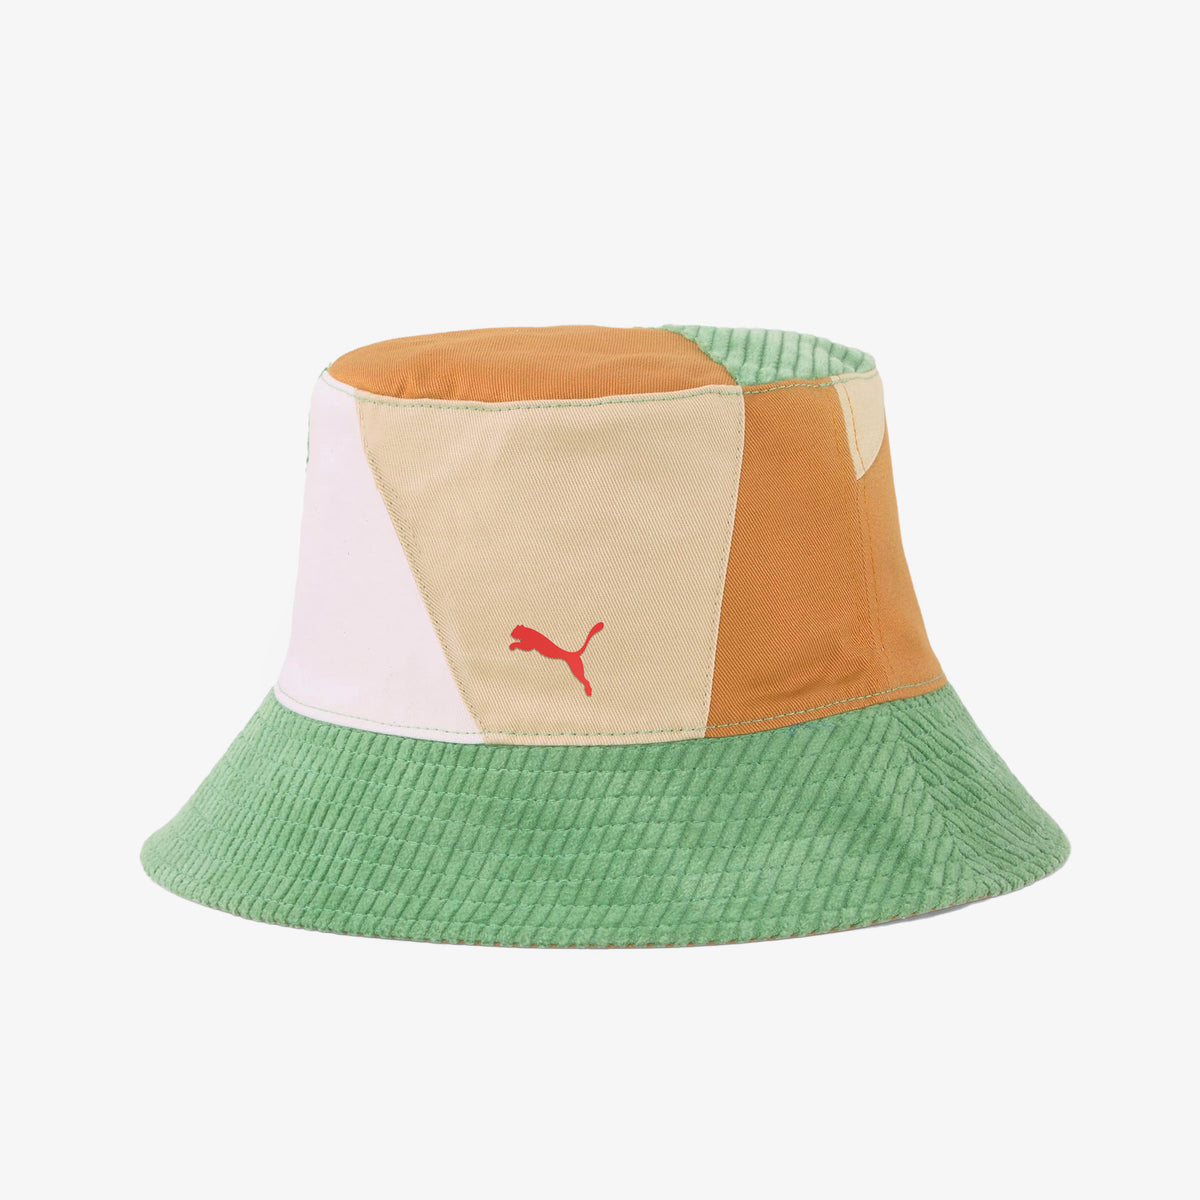 Childhood Dreams Bucket Hat - Light Sand